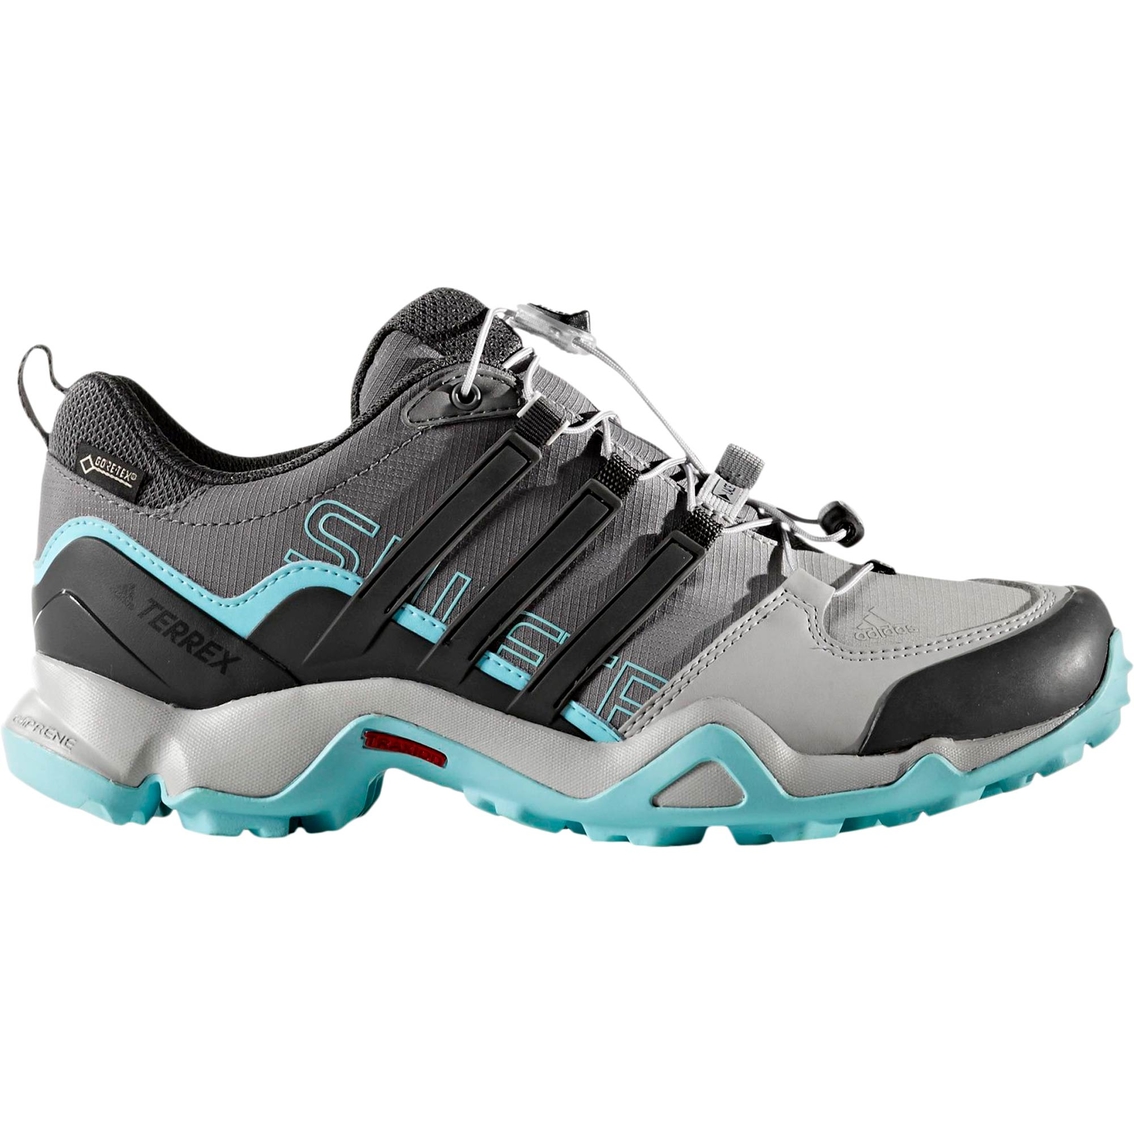 Adidas Outdoor Women's Terrex Swift R Gtx Hiking Shoes | Hiking & Trail ...